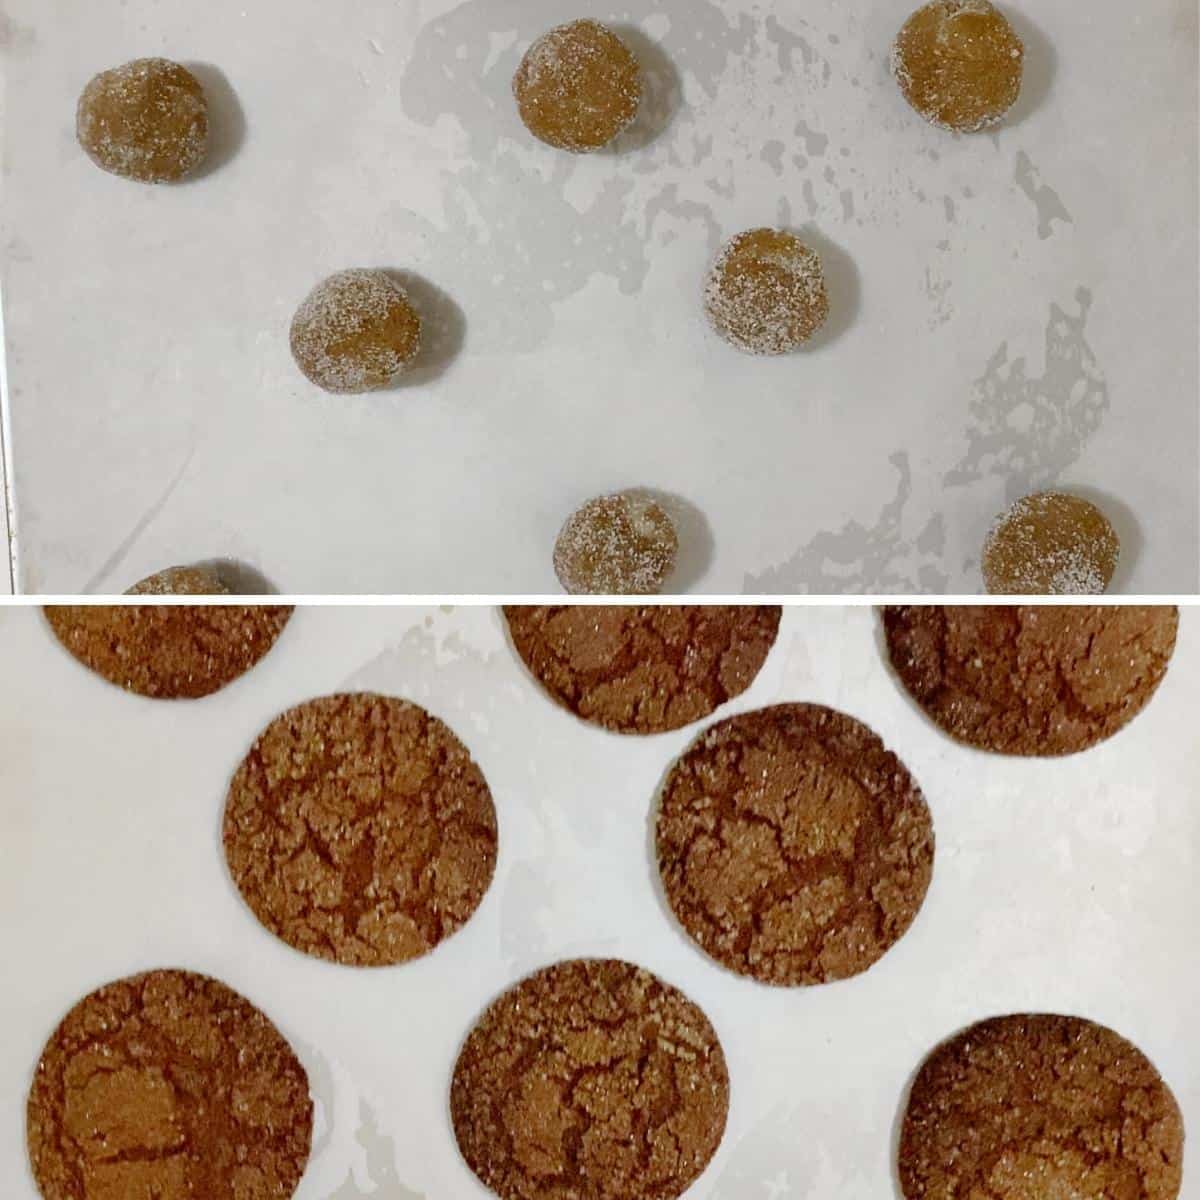 Progress pictures baking the molasses cookies.